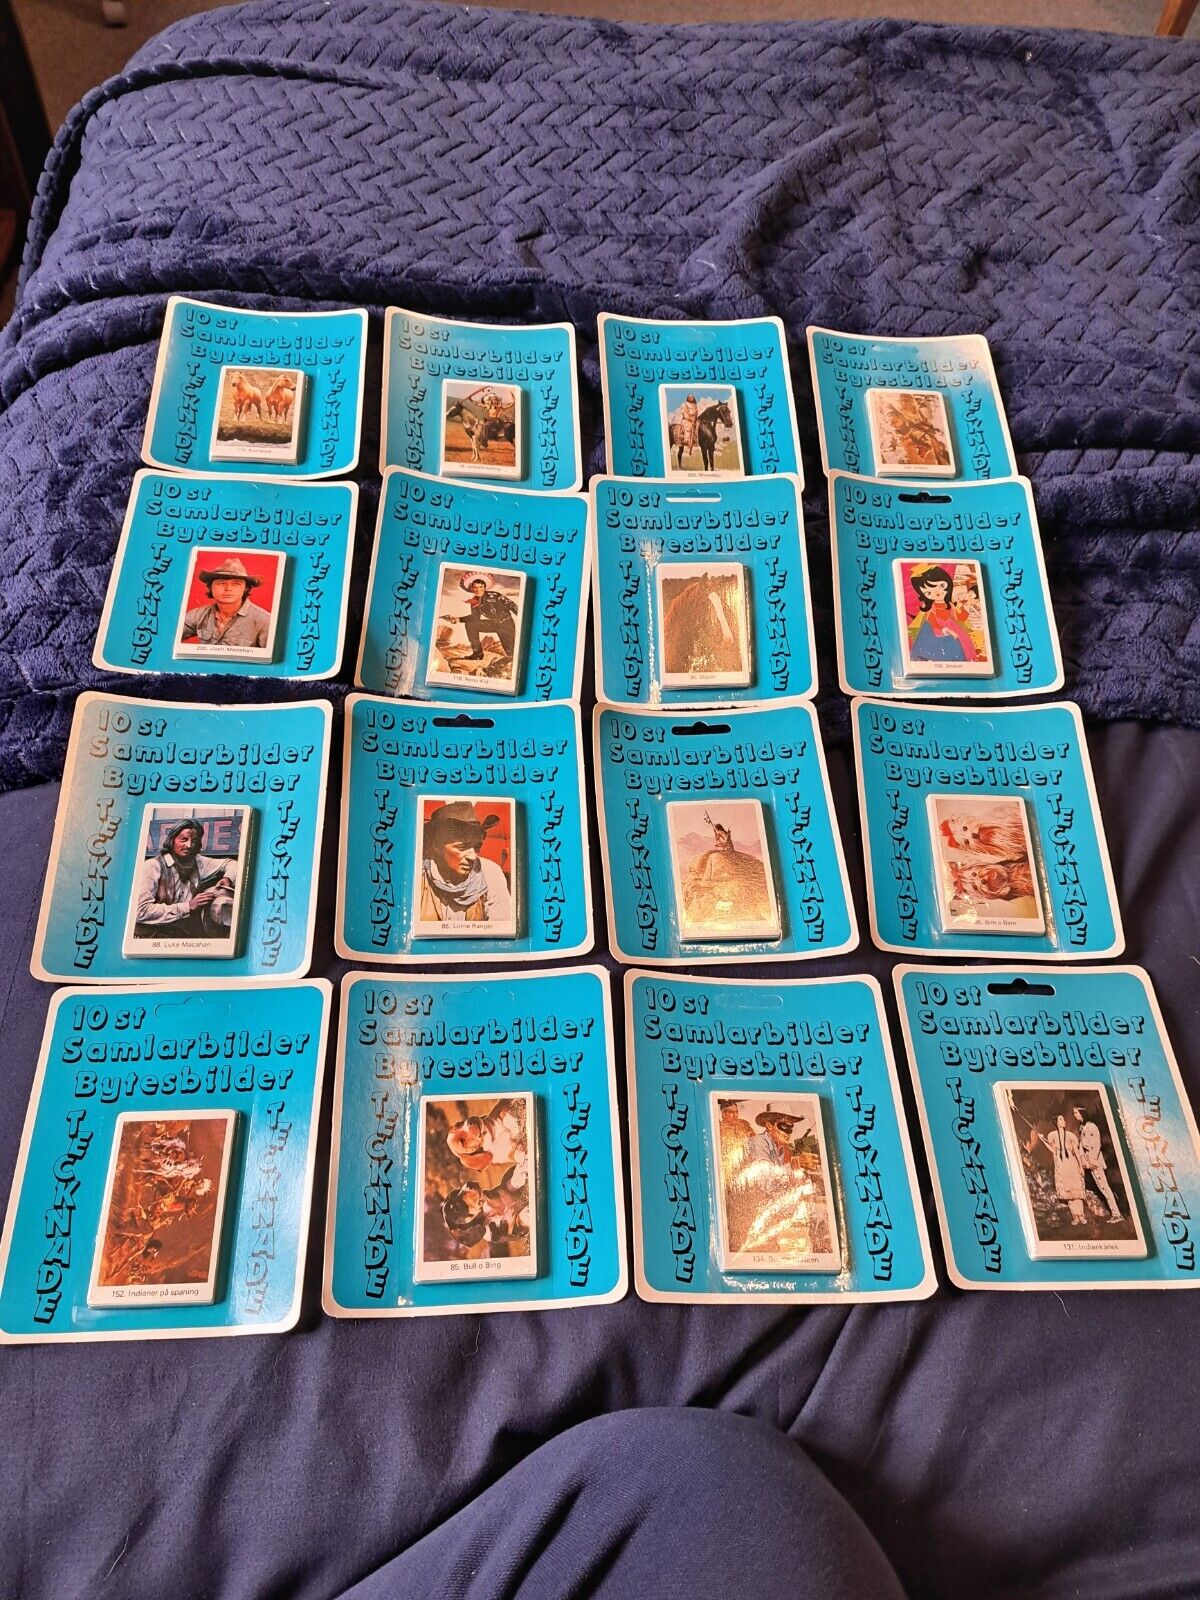 16 x samlarbilder swedish sealed packs 1980s cards superb condition rare